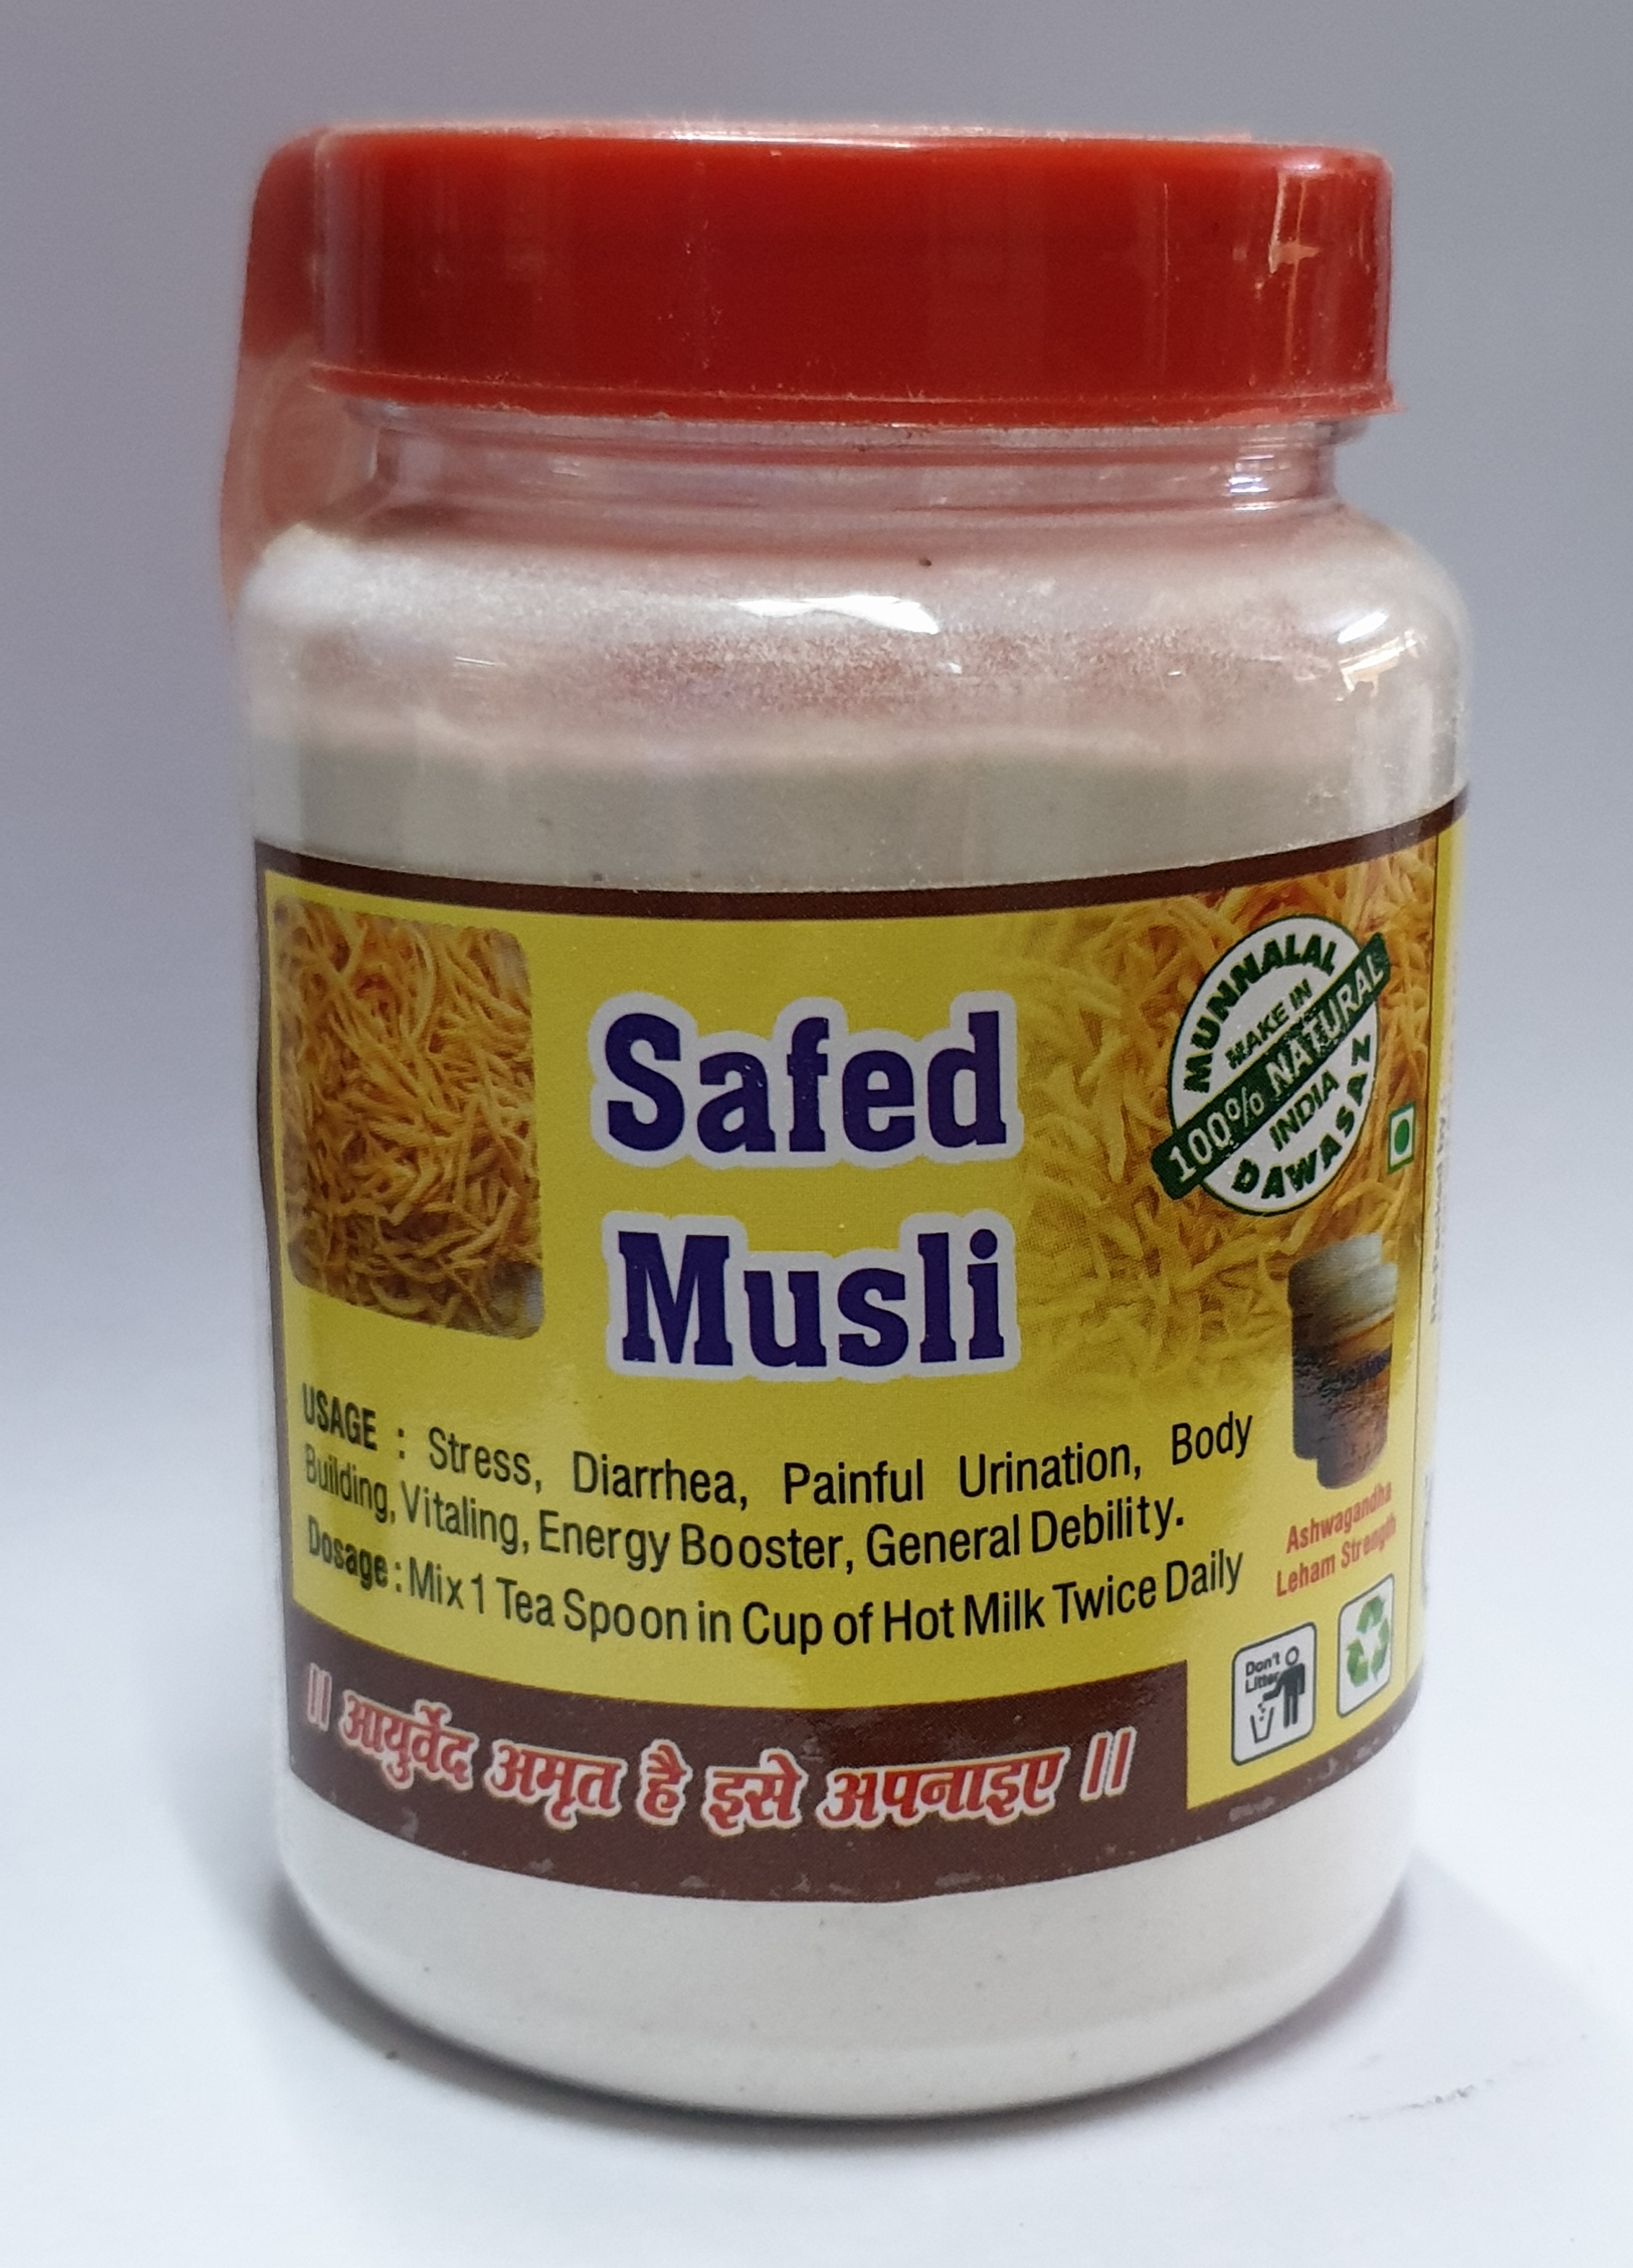 Safed musli powder